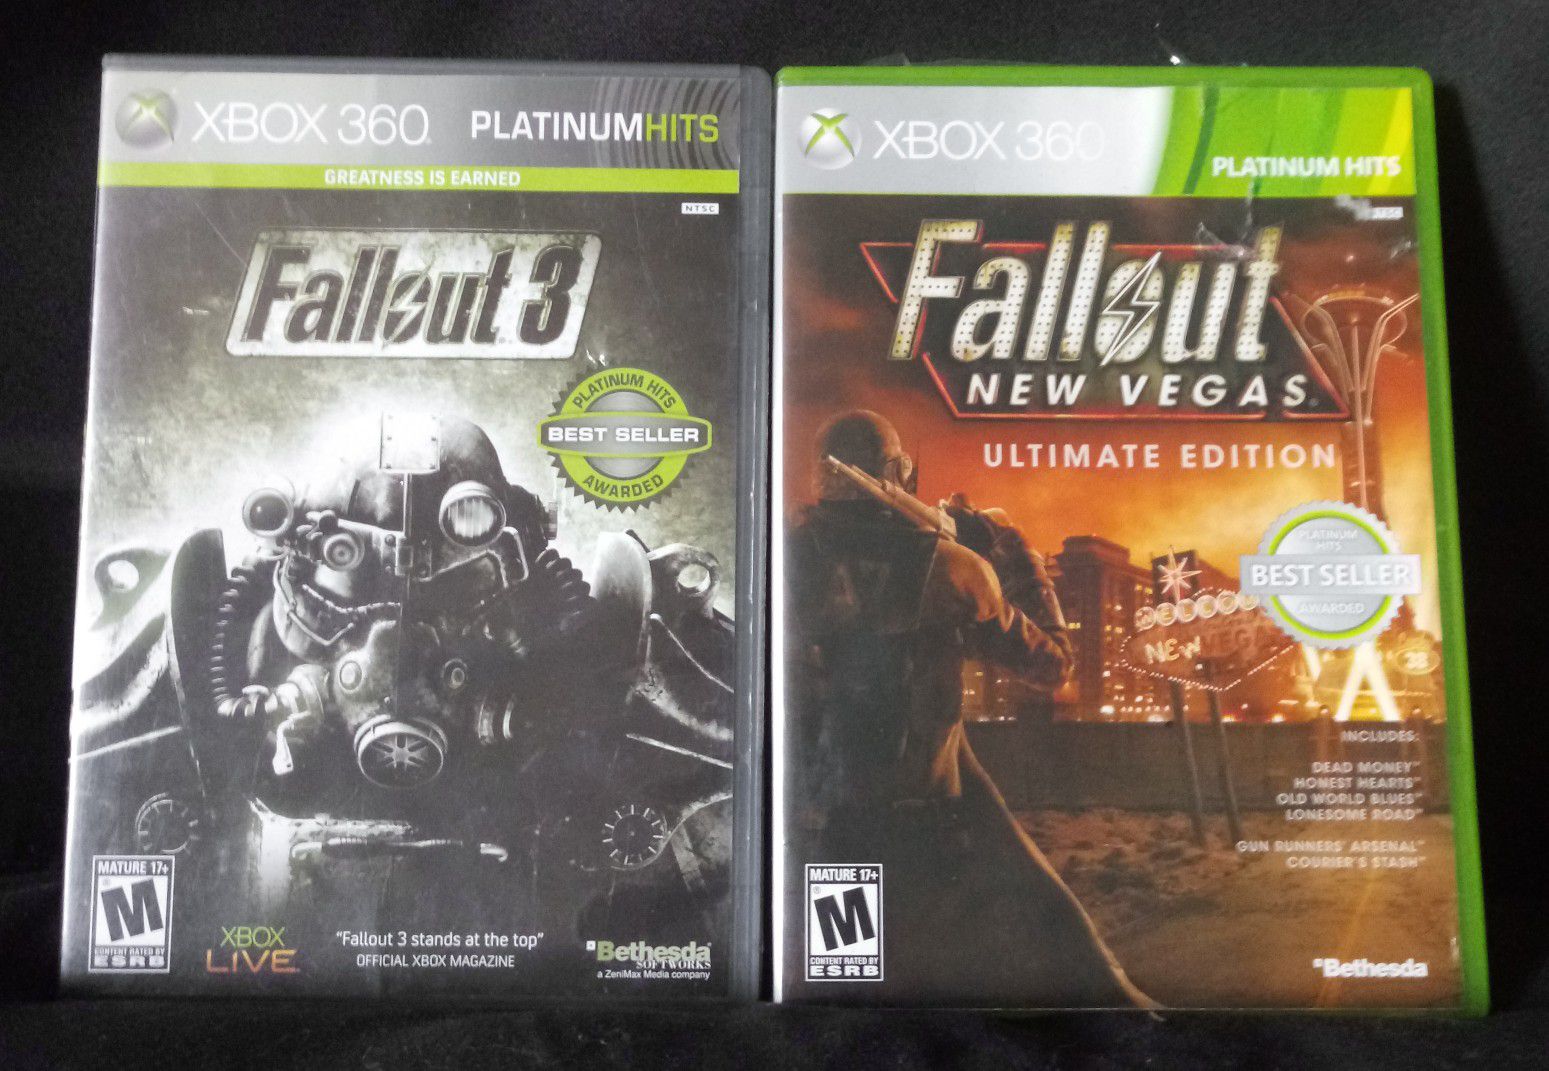 Fallout 3 & Fallout New Vegas Ultimate Edition - XBOX 360